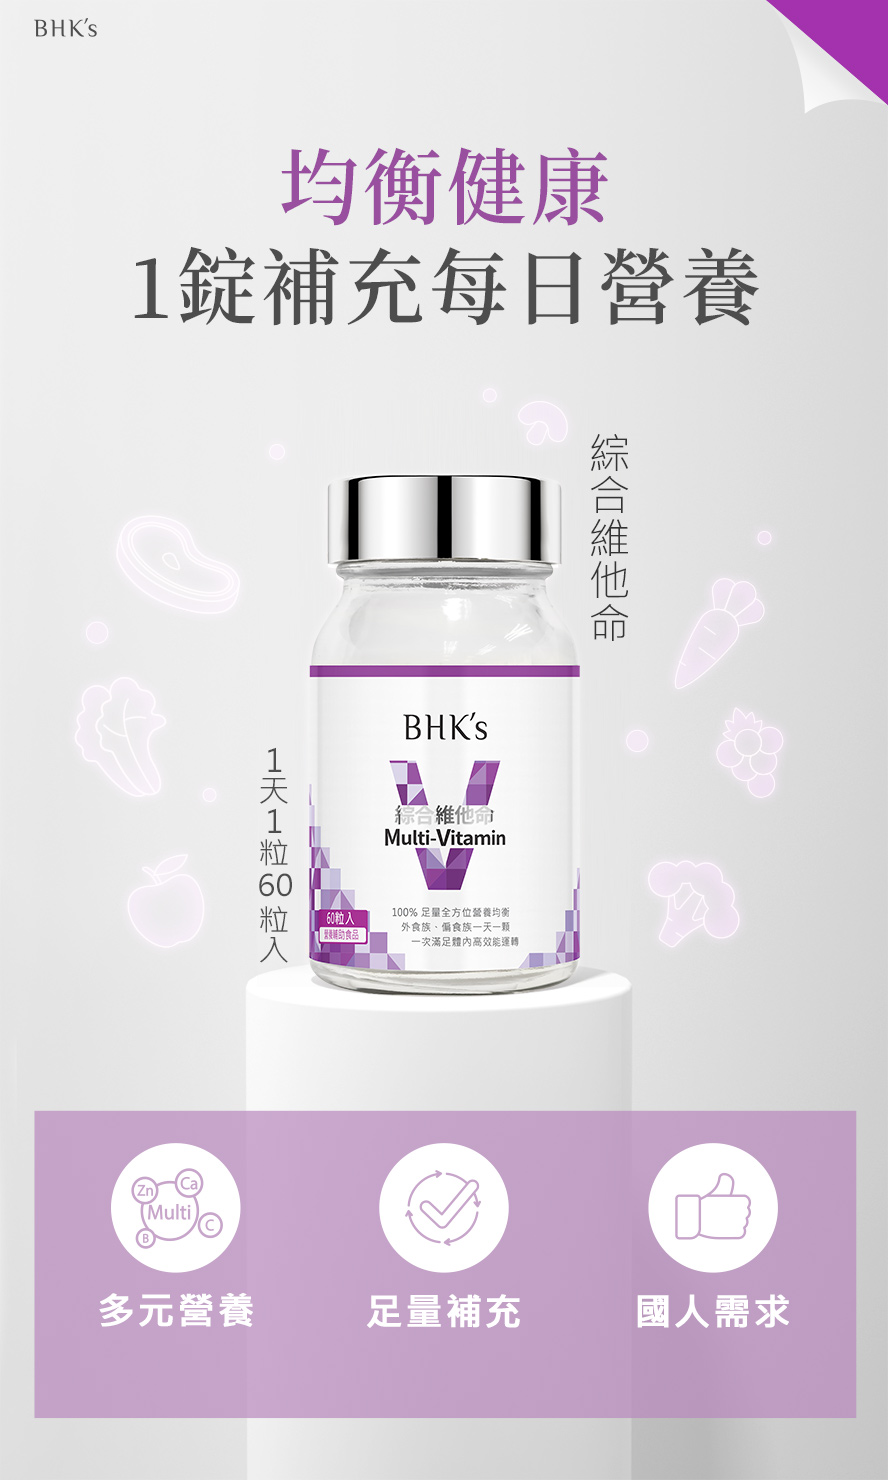 BHK's綜合維他命，內含人體所需13種維生素與礦物質，每日一錠滿足營養需求。